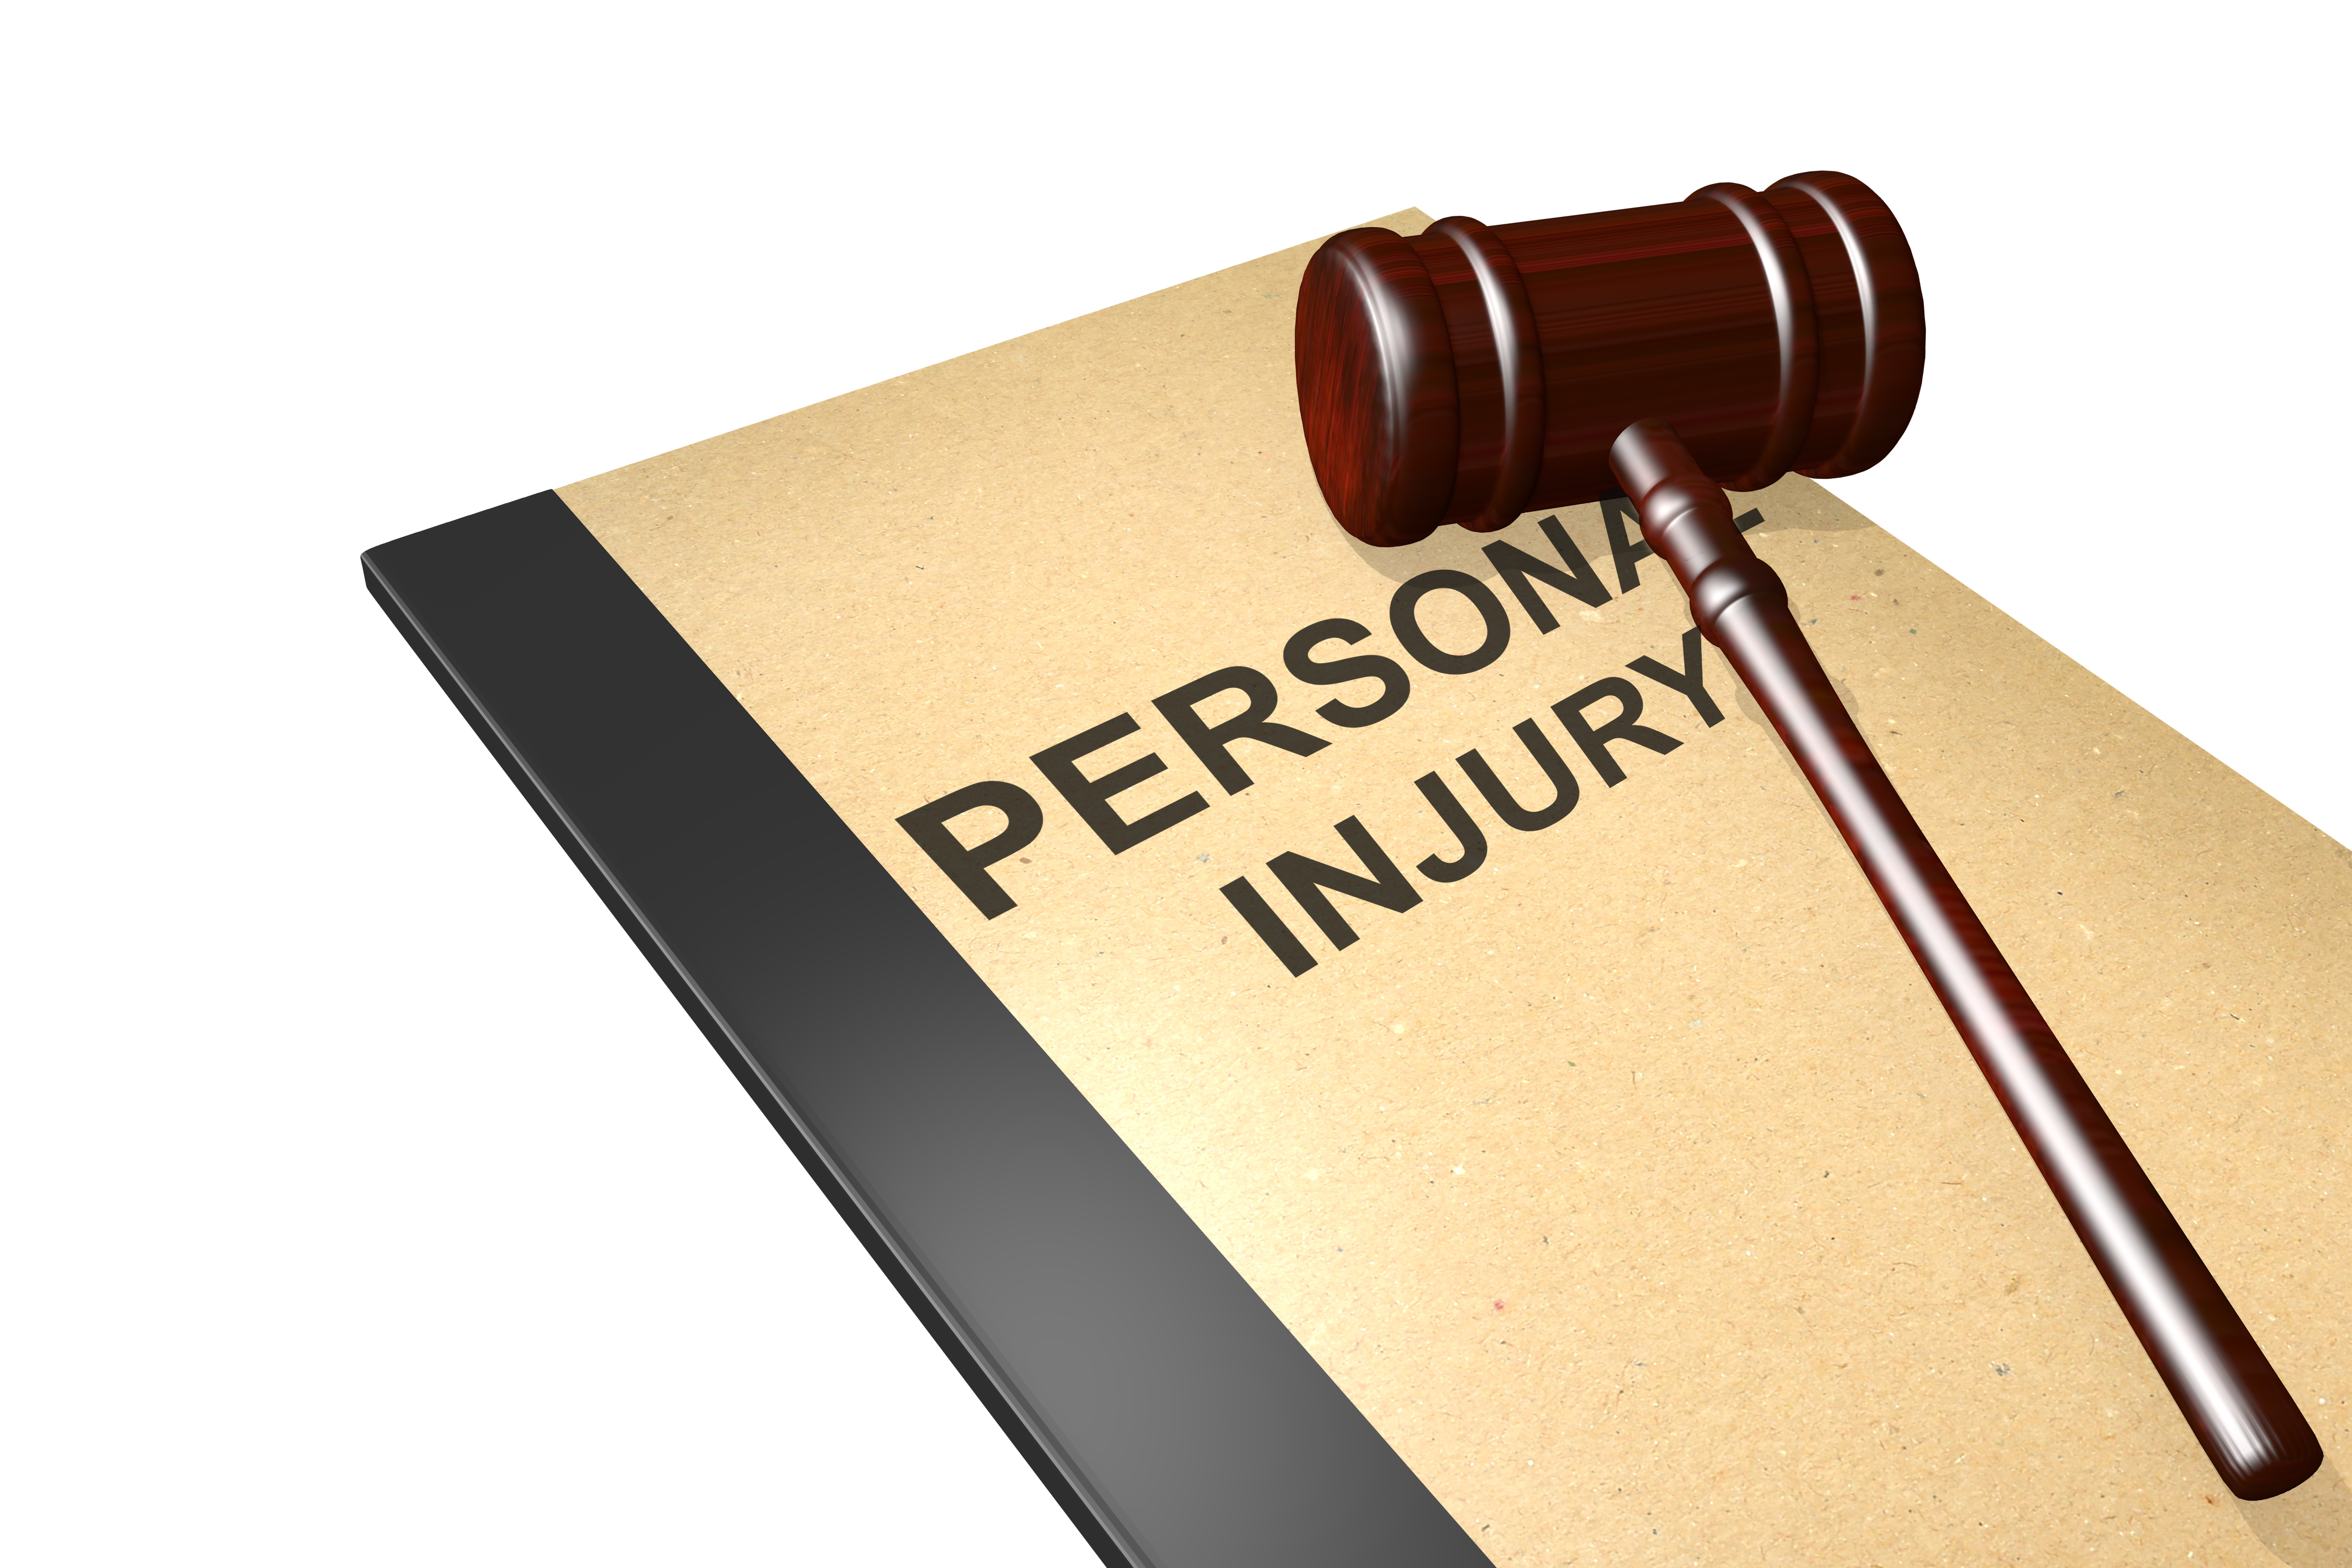 Юрист компенсации. Personal injury lawyer. Injury attorney. Правовой документ арт. Personal injury lawyer NYC.